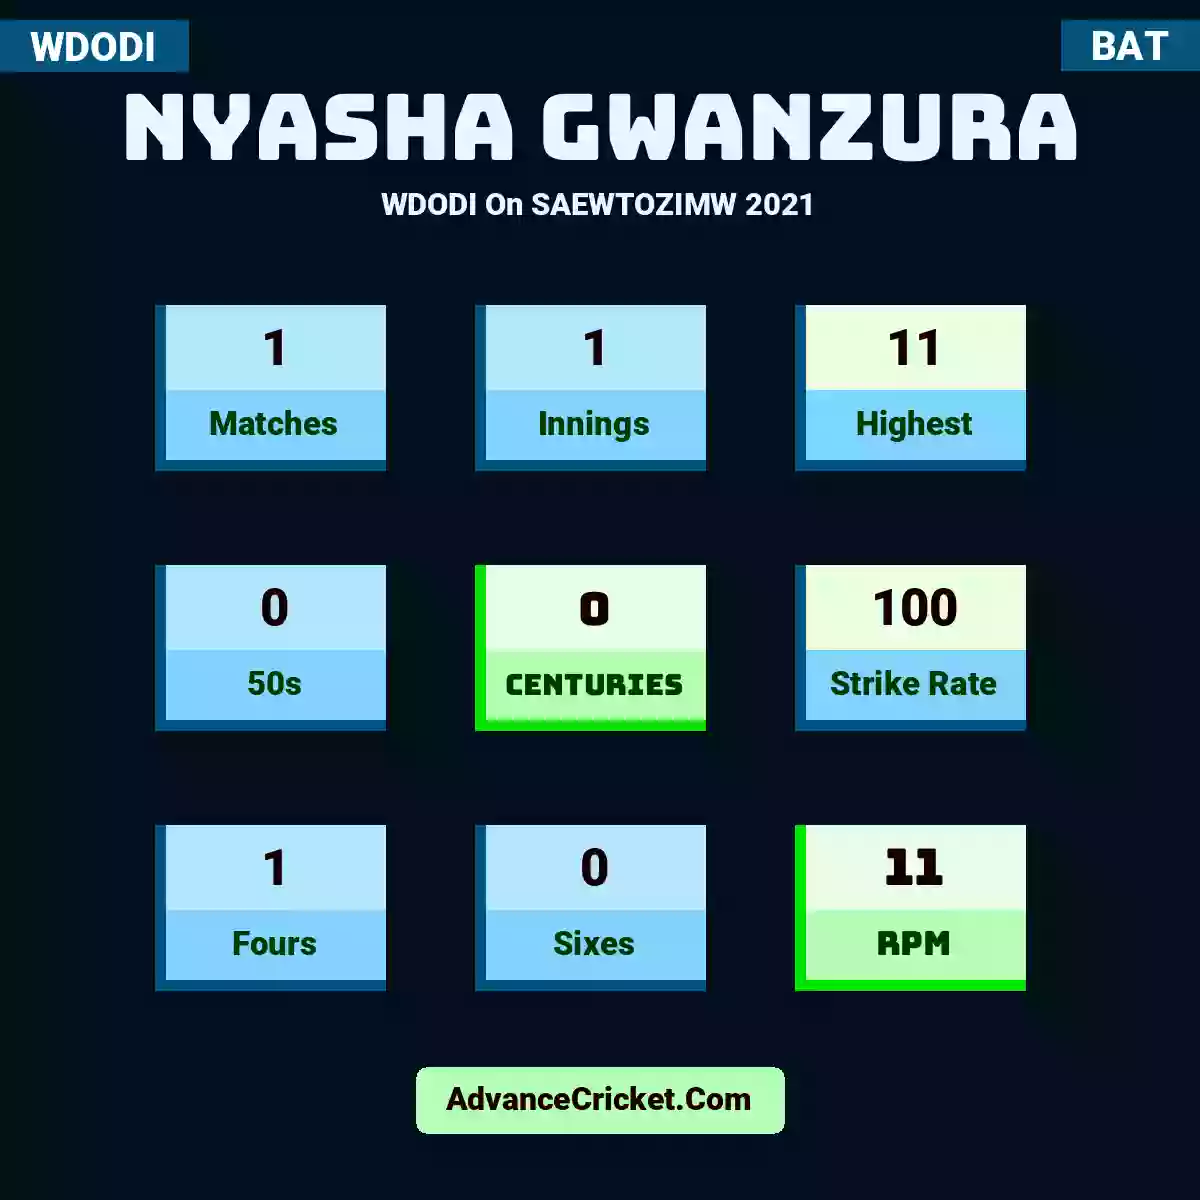 Nyasha Gwanzura WDODI  On SAEWTOZIMW 2021, Nyasha Gwanzura played 1 matches, scored 11 runs as highest, 0 half-centuries, and 0 centuries, with a strike rate of 100. N.Gwanzura hit 1 fours and 0 sixes, with an RPM of 11.